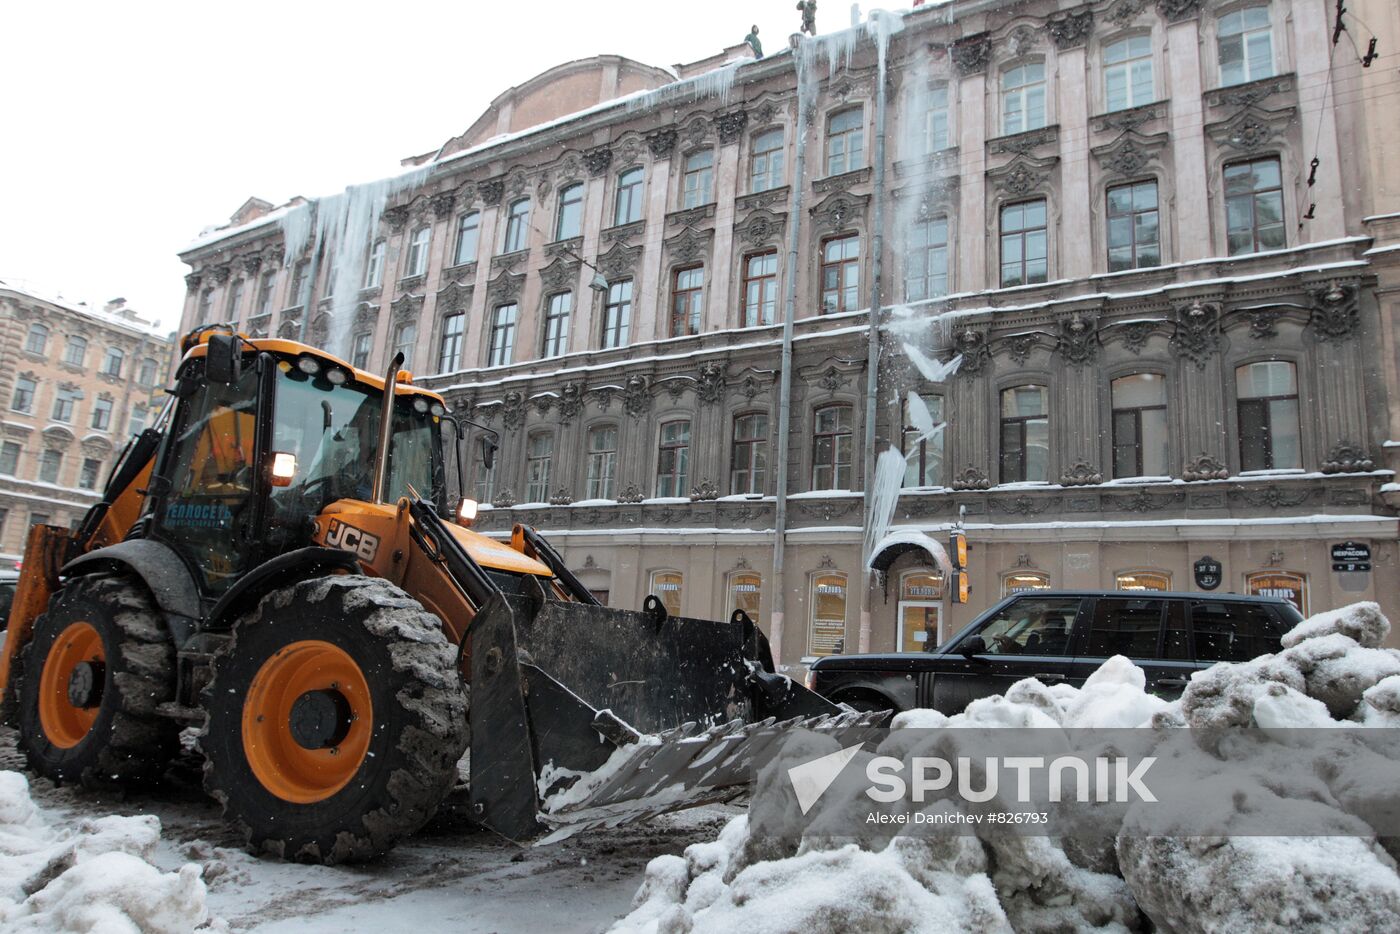 Snow removal, St. Petersburg